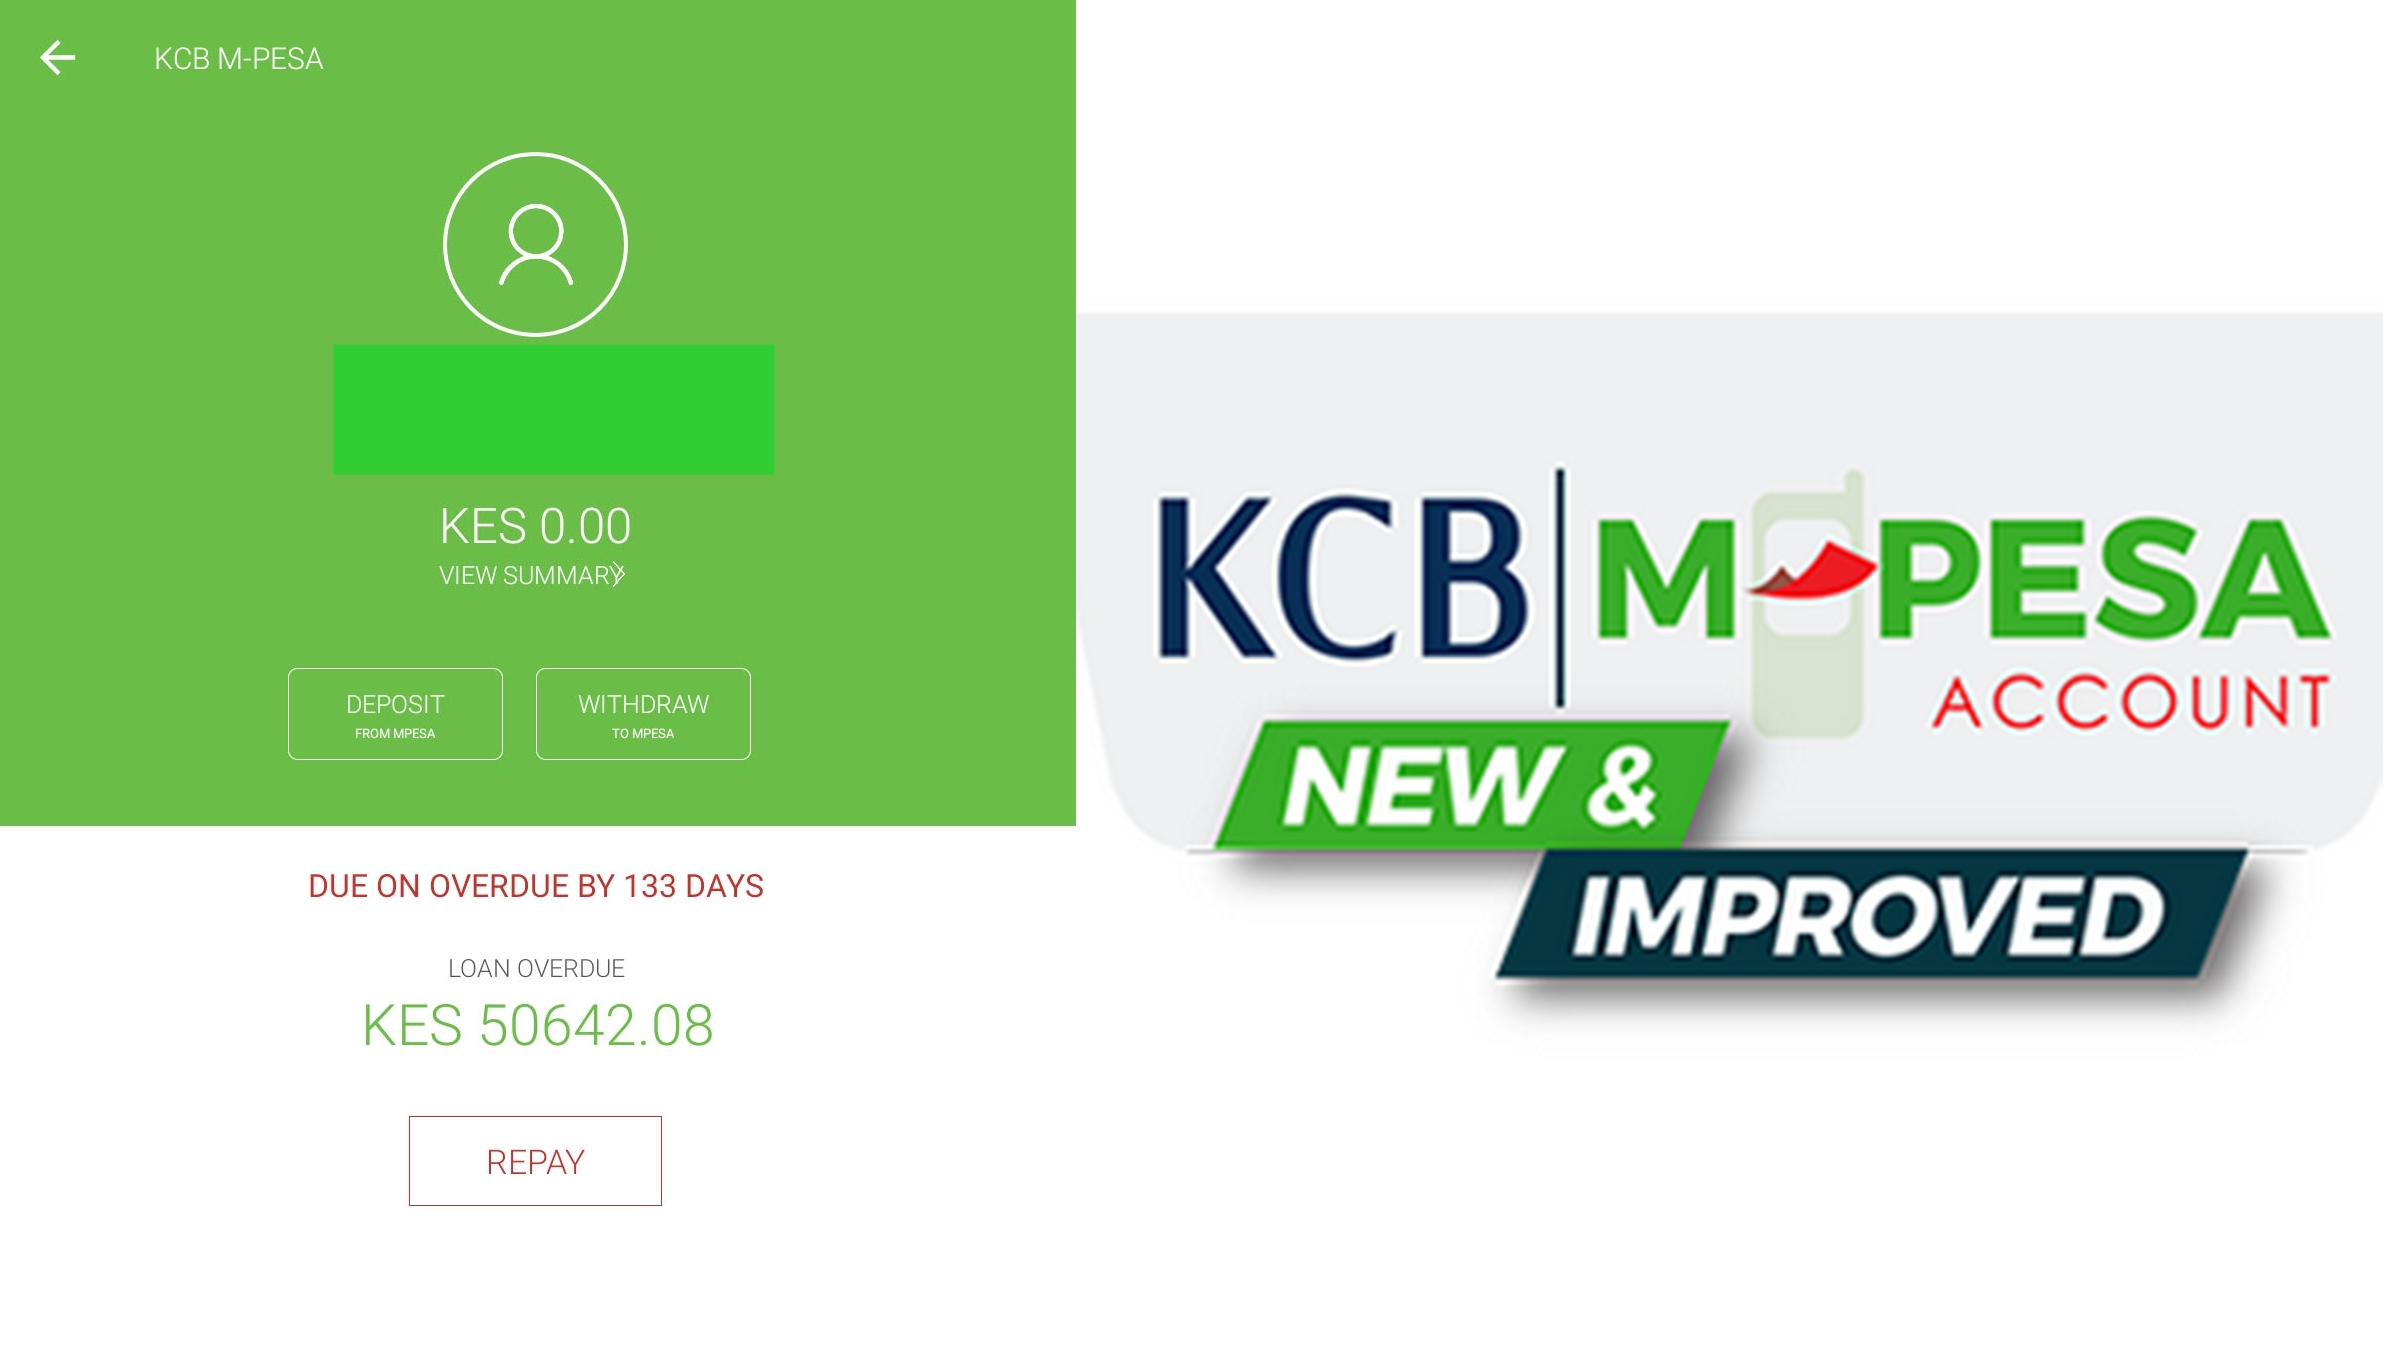 KCB Mpesalate loan repayment1